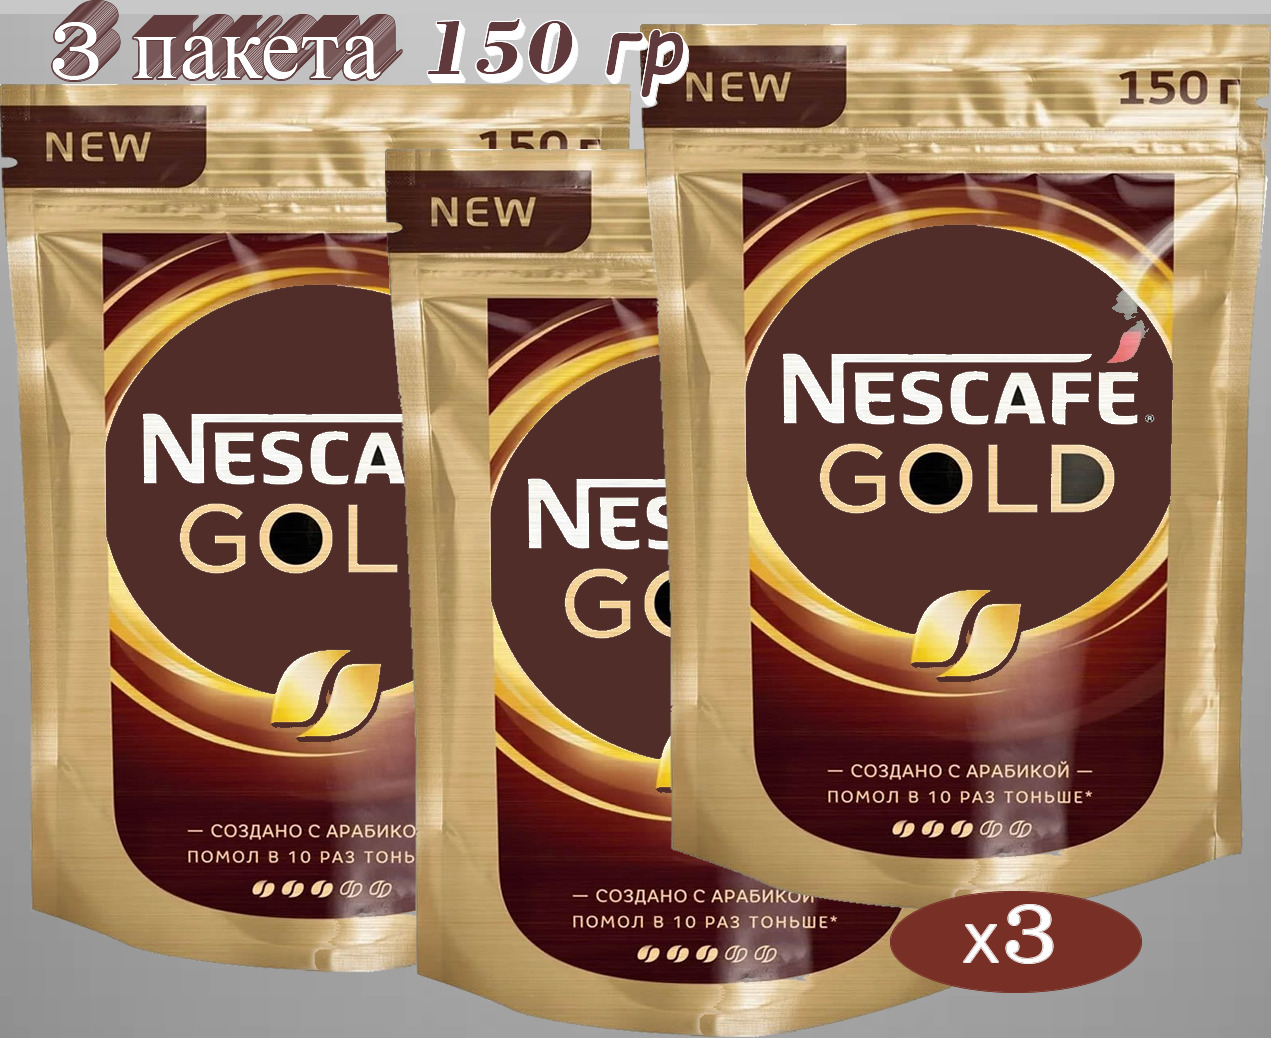 Nescafe gold пакет. Нескафе Голд 150 гр. Кофе Нескафе 150гр. Нескафе Голд в пакете.